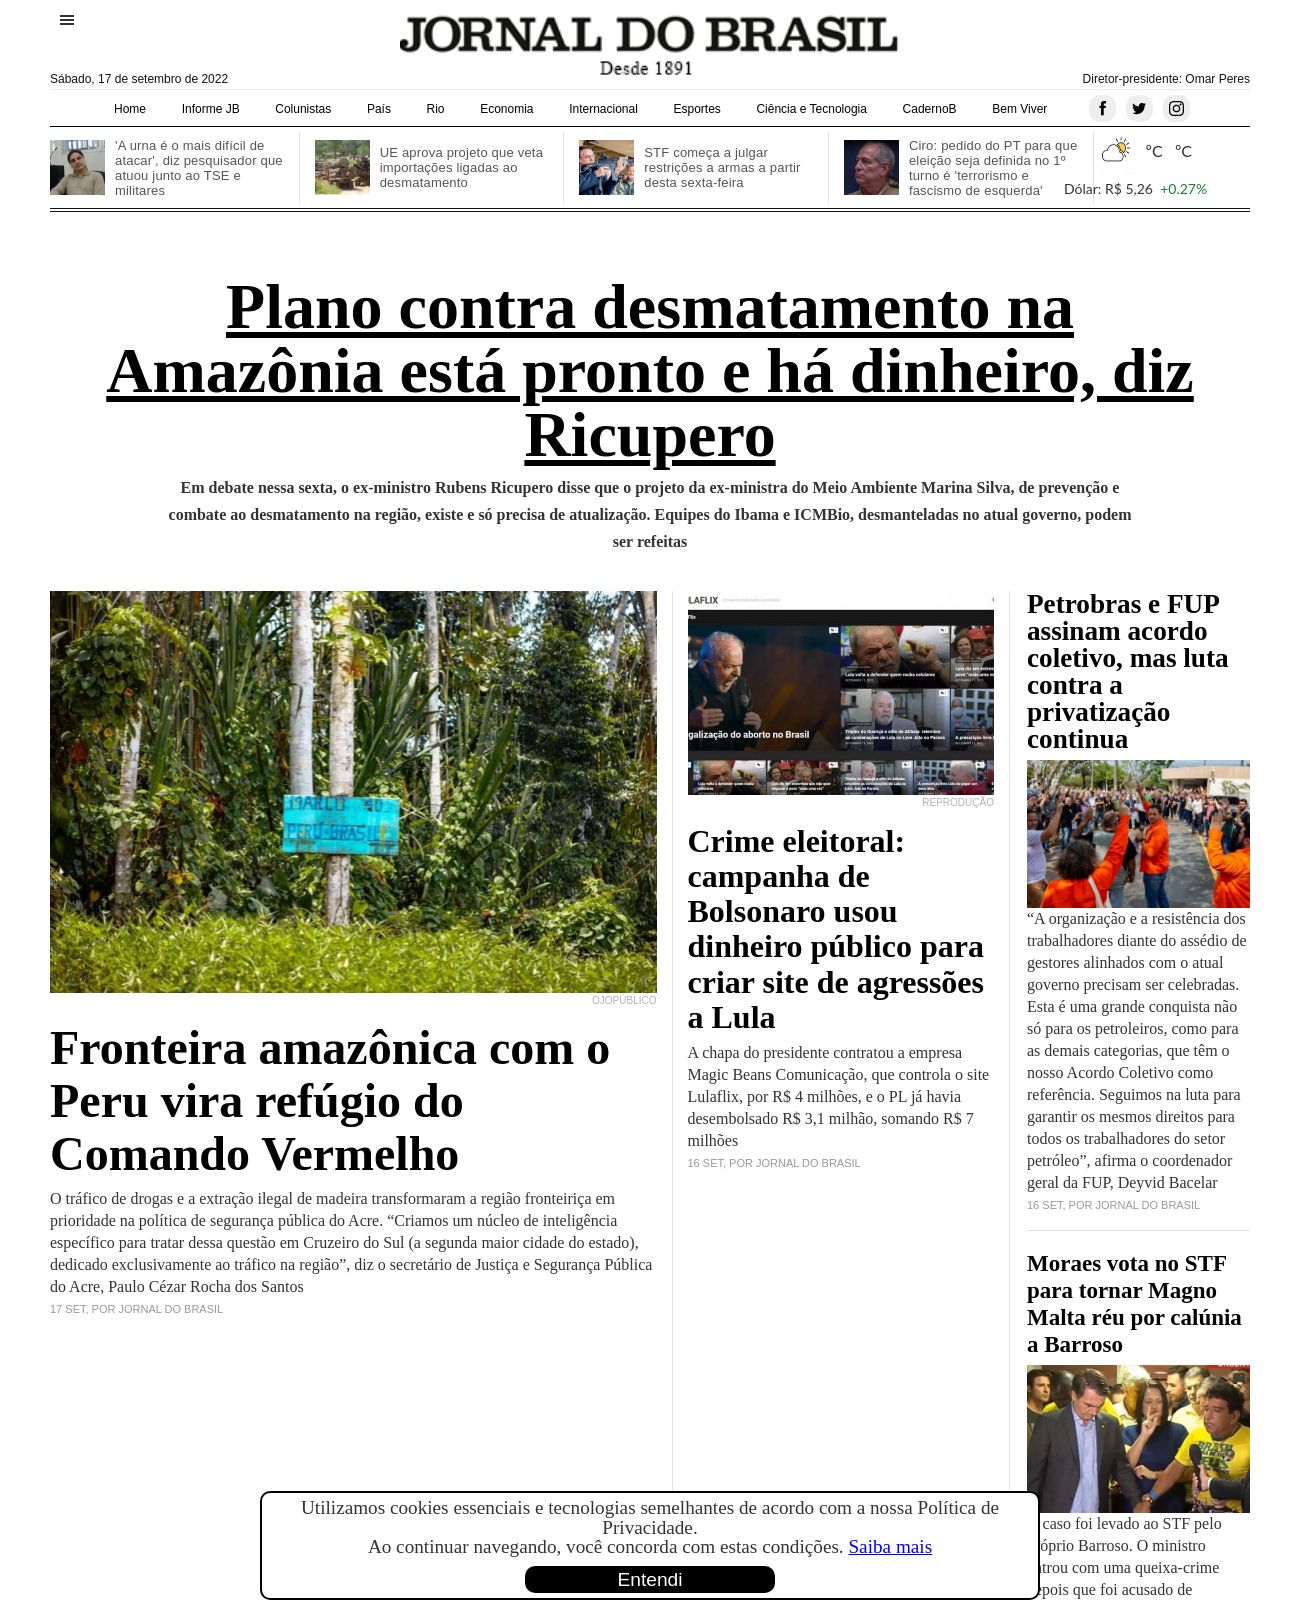 Jornal do Brasil at 2022-09-17 09:03:19-03:00 local time